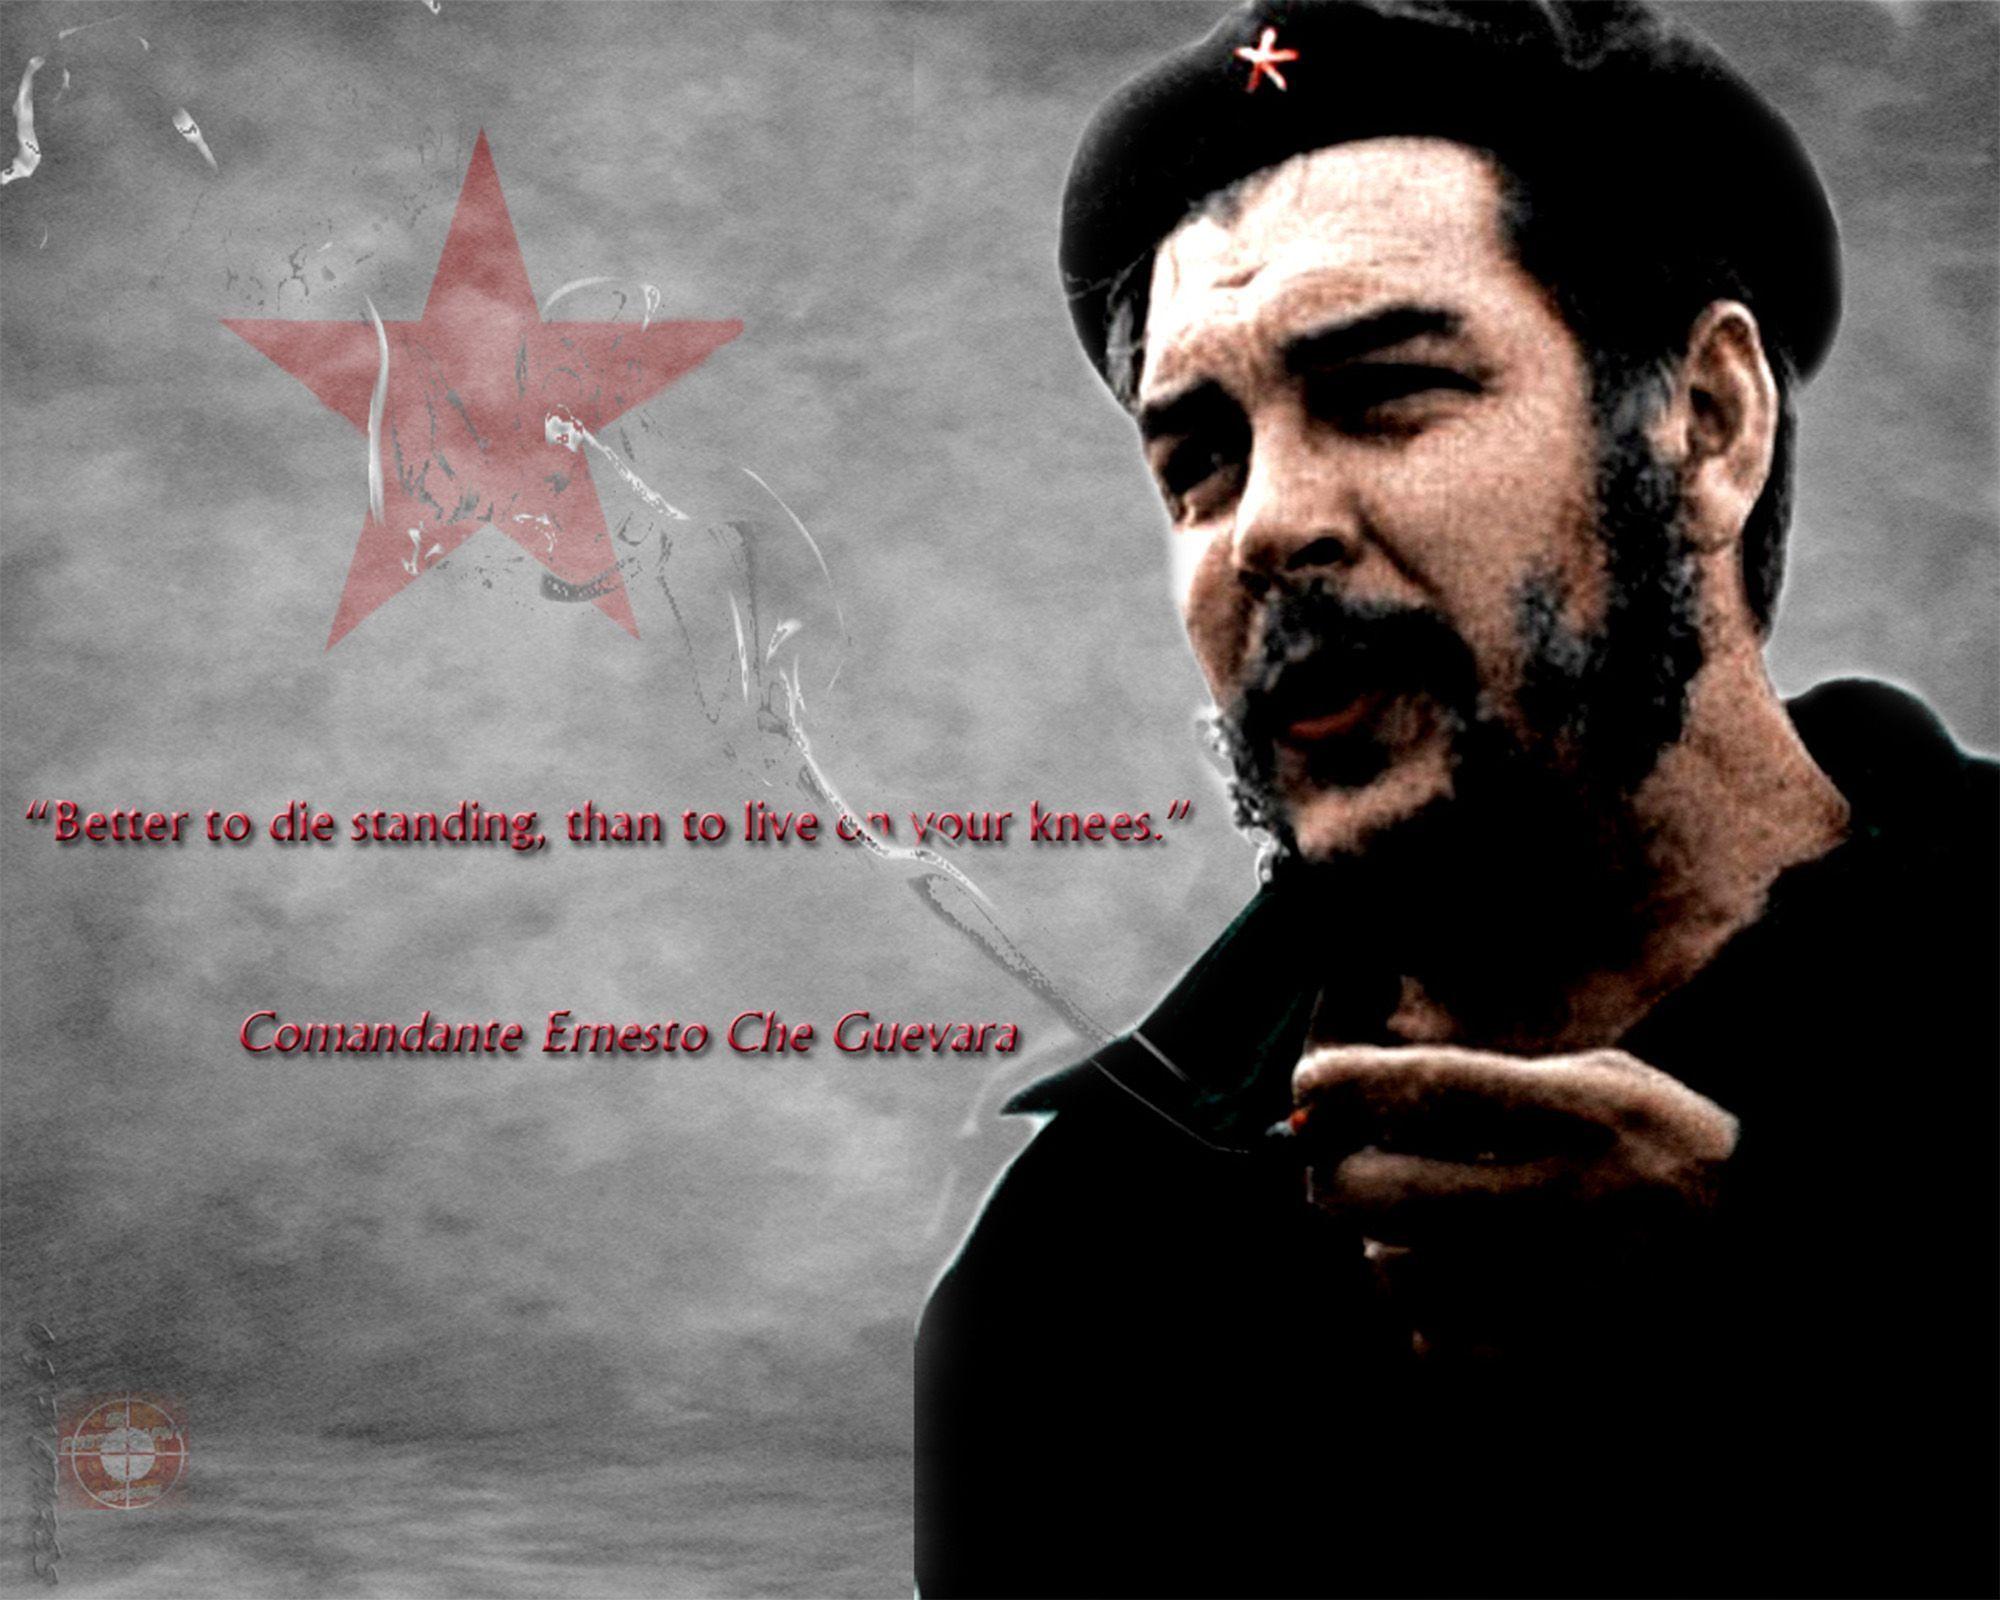 Che Guevara dark wallpaper  Che guevara art Che guevara photos Che  guevara images